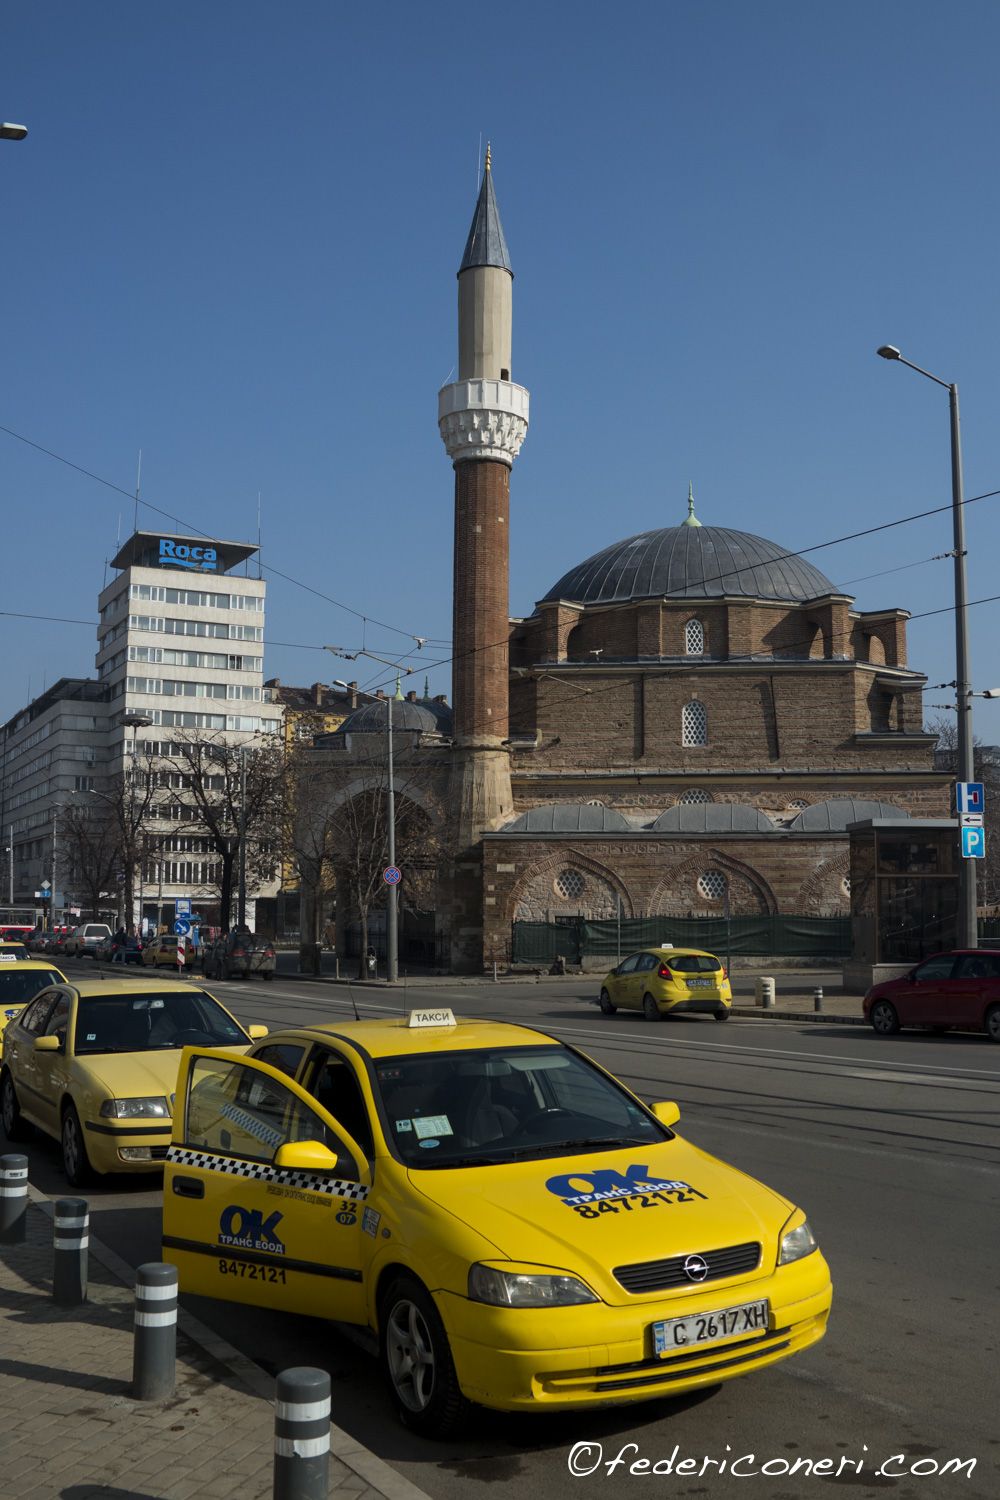 Sofia Central Mosque - Banya Bashi Mosque 